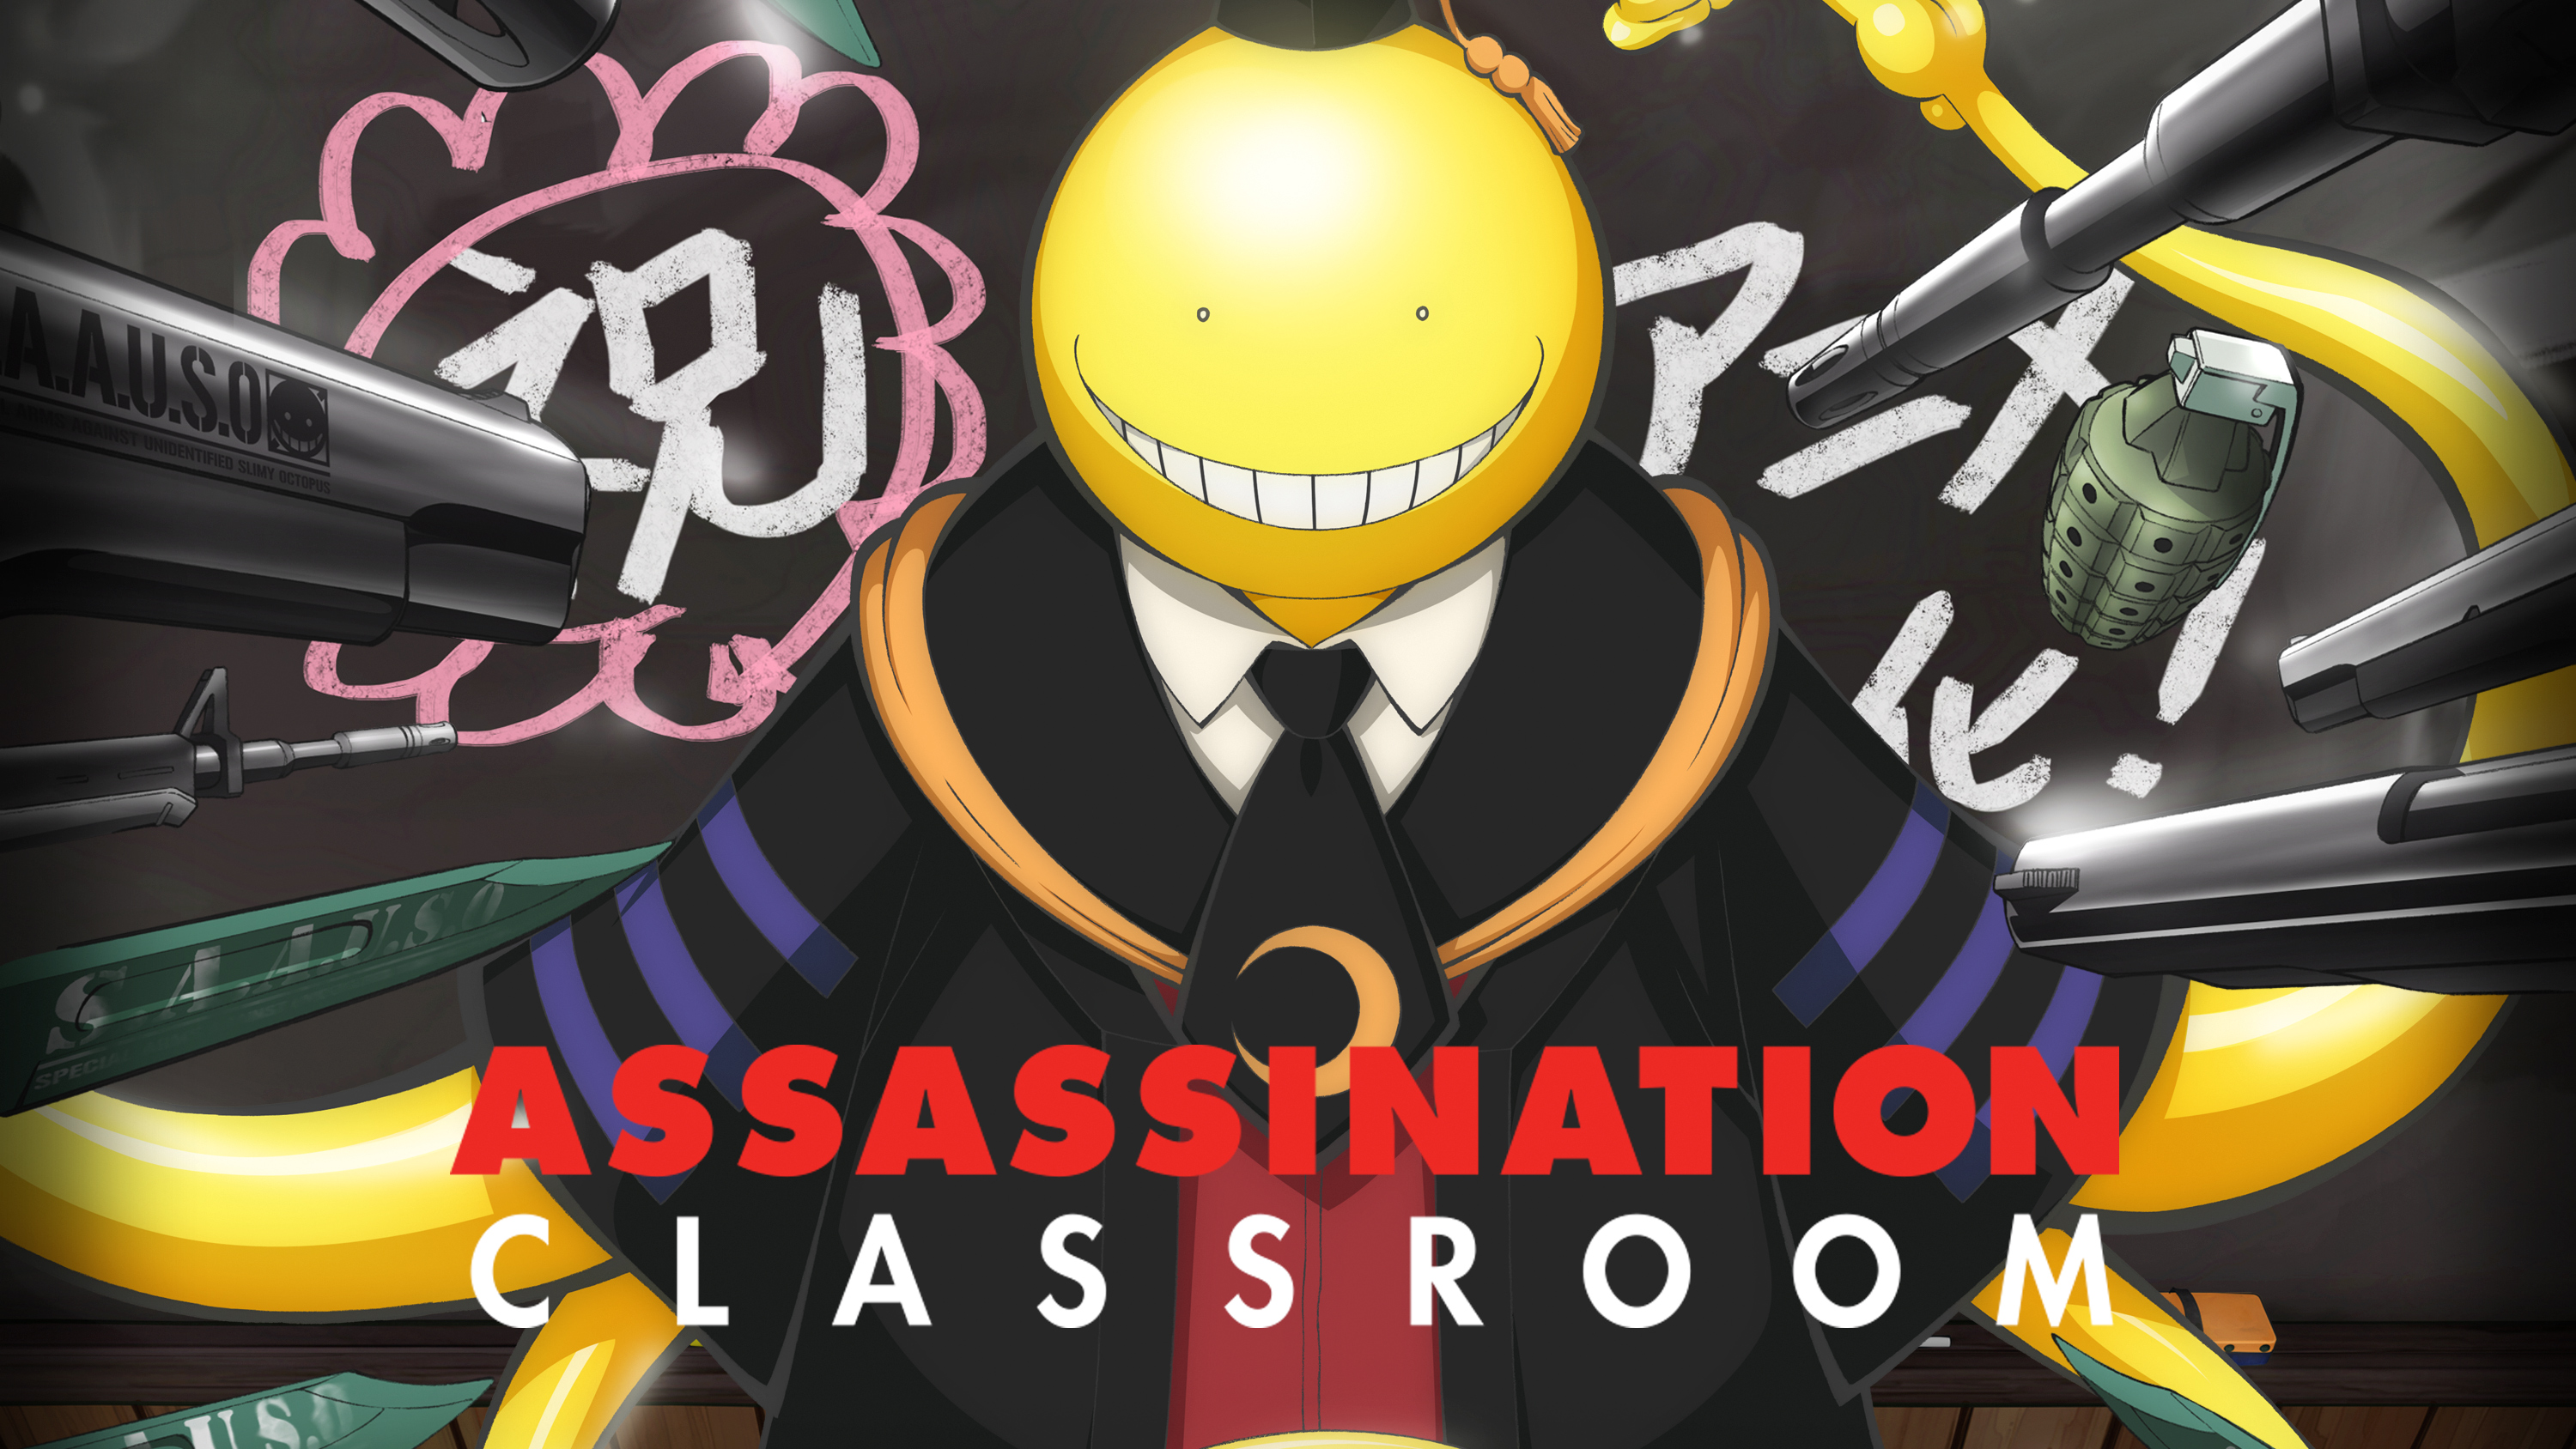 Emotional anime #4 Assassination classroom